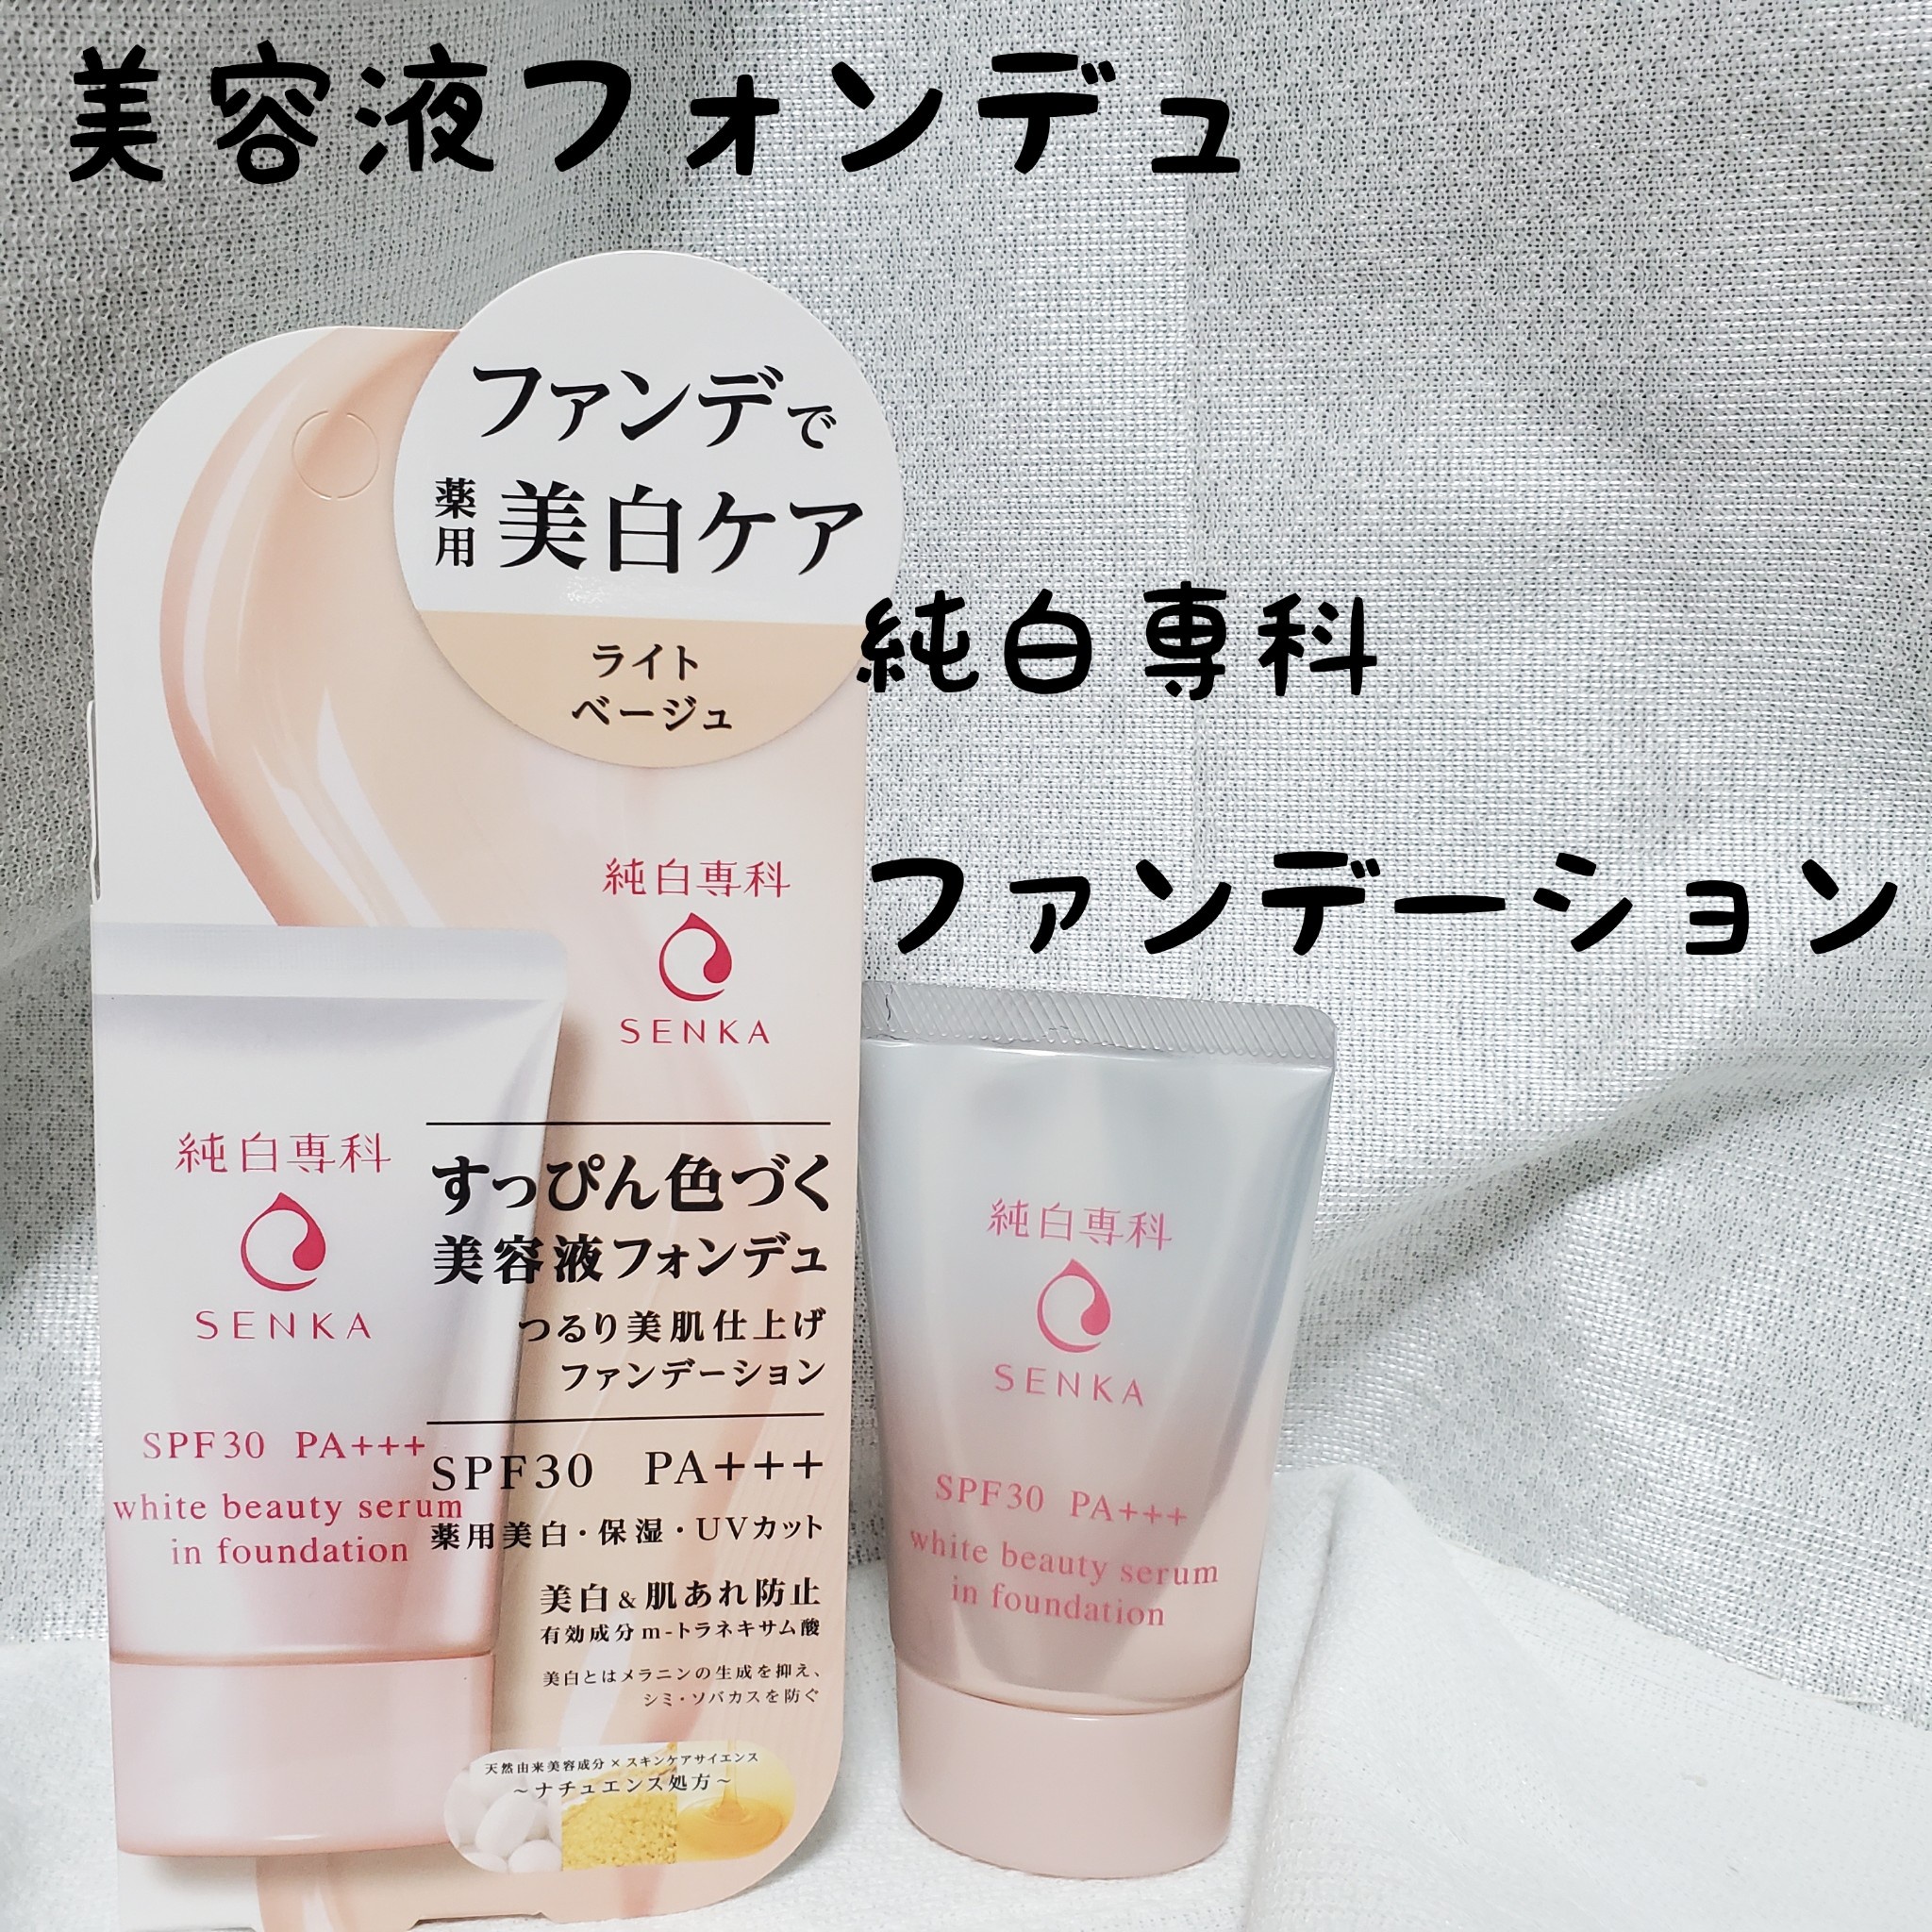 SENKA(専科) / 純白専科 すっぴん色づく美容液フォンデュの公式商品 